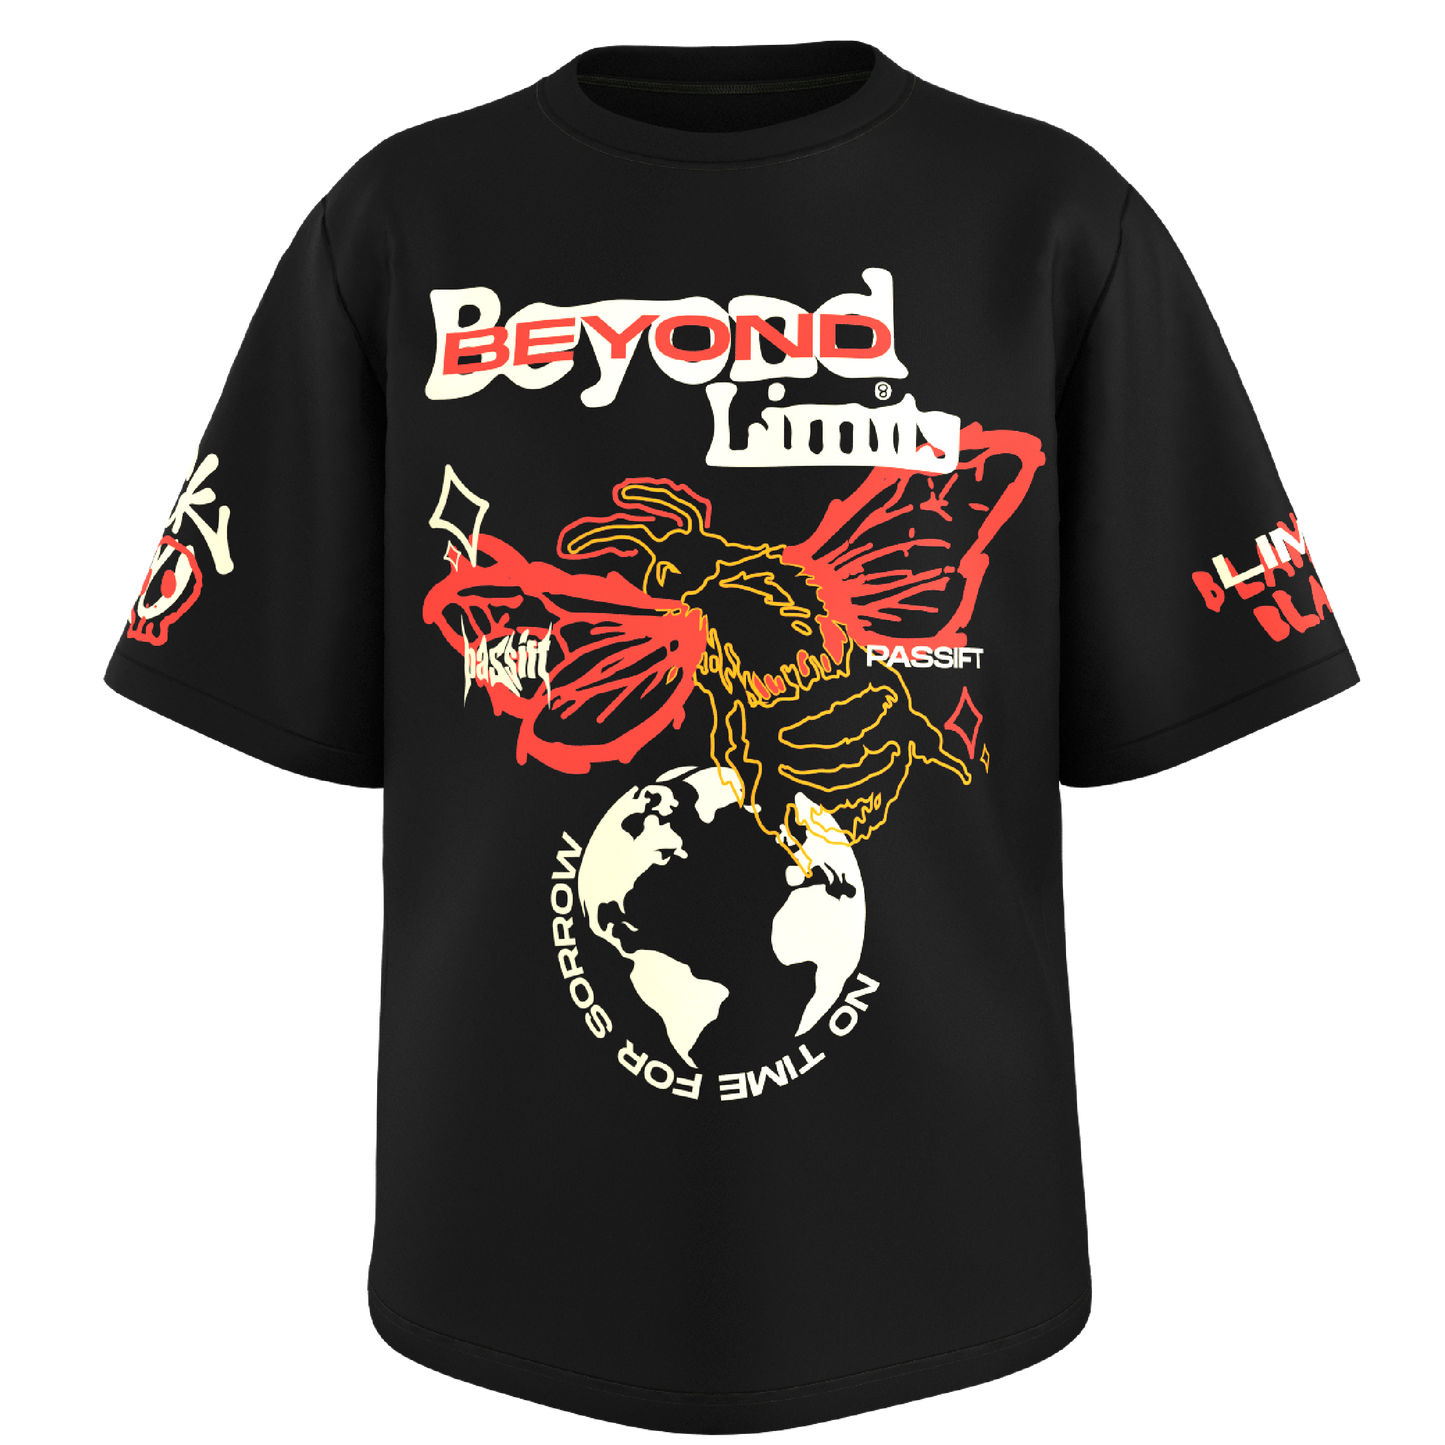 Beyond Limit Black T-shirt